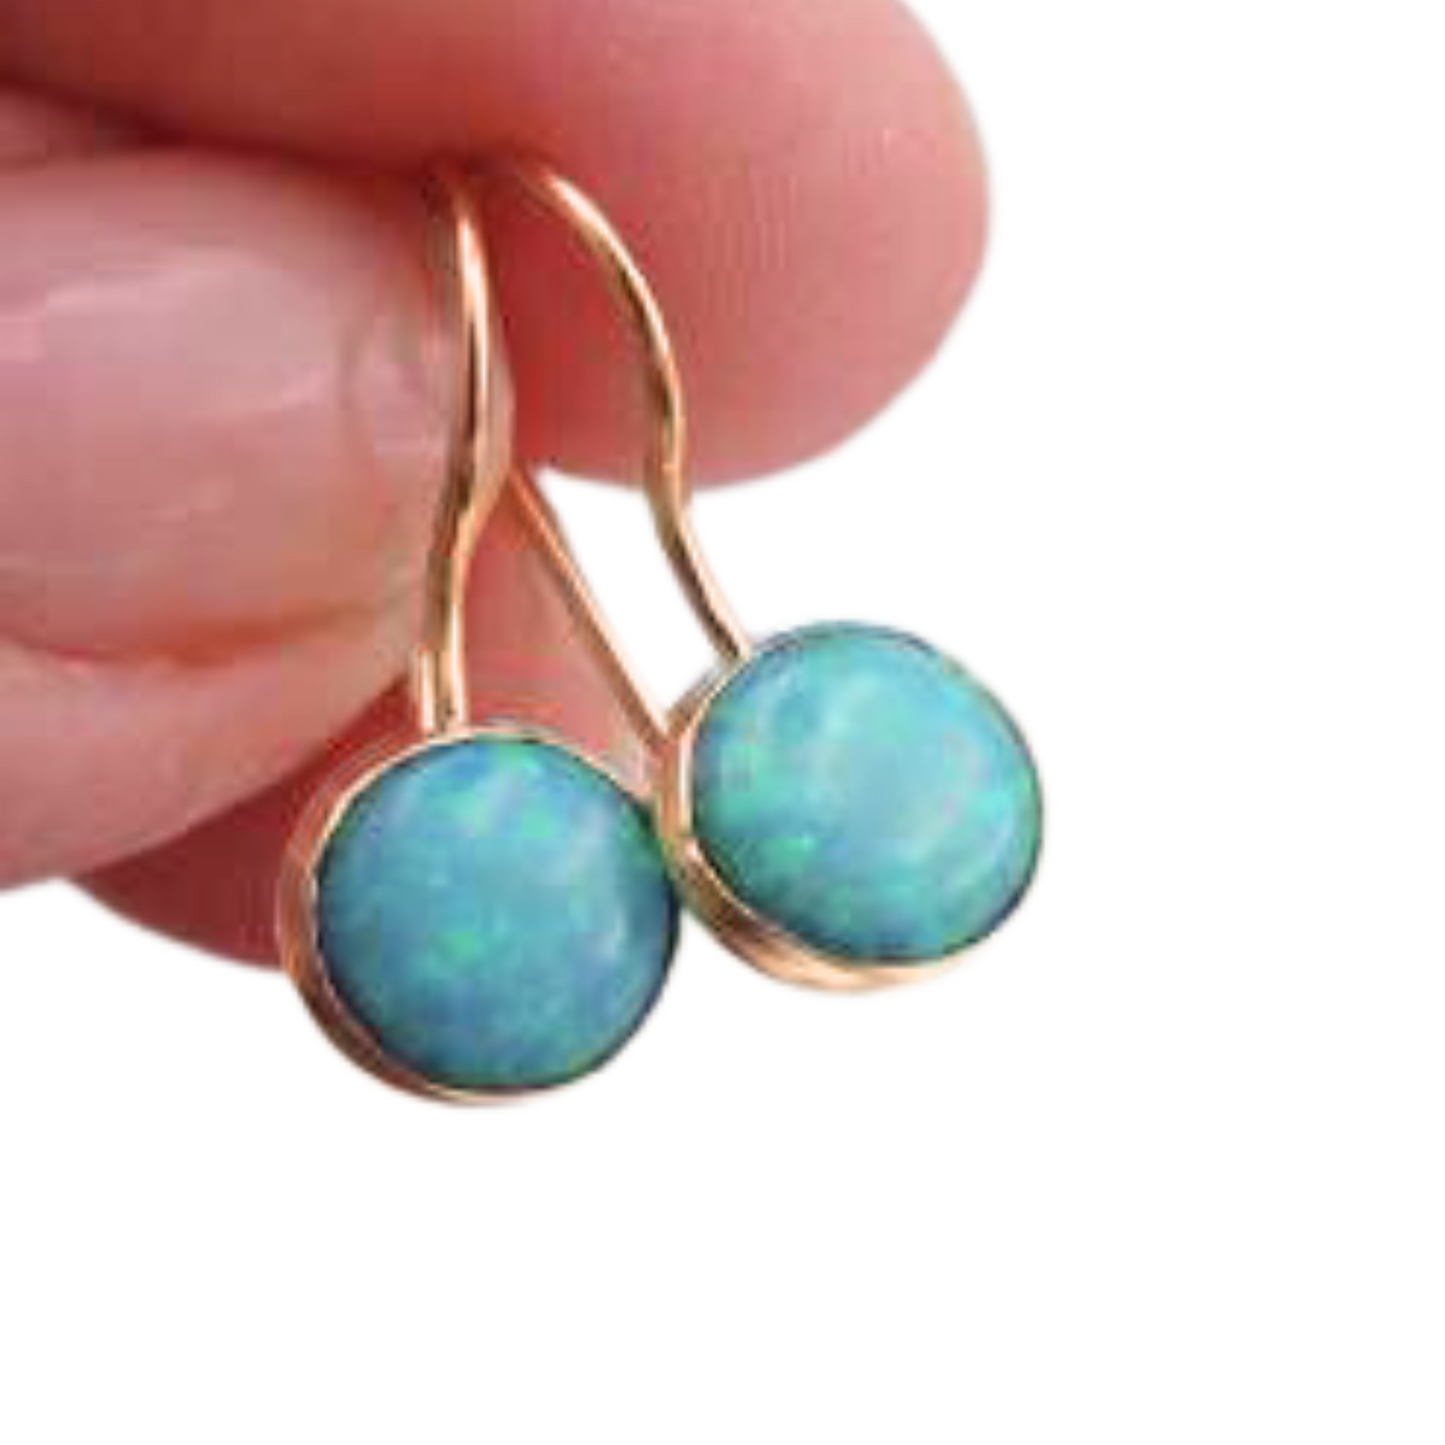 Hadar Designers Handmade Classy 9k/14k Gold 8mm Blue Opal Dangle Earrings October Birthstone